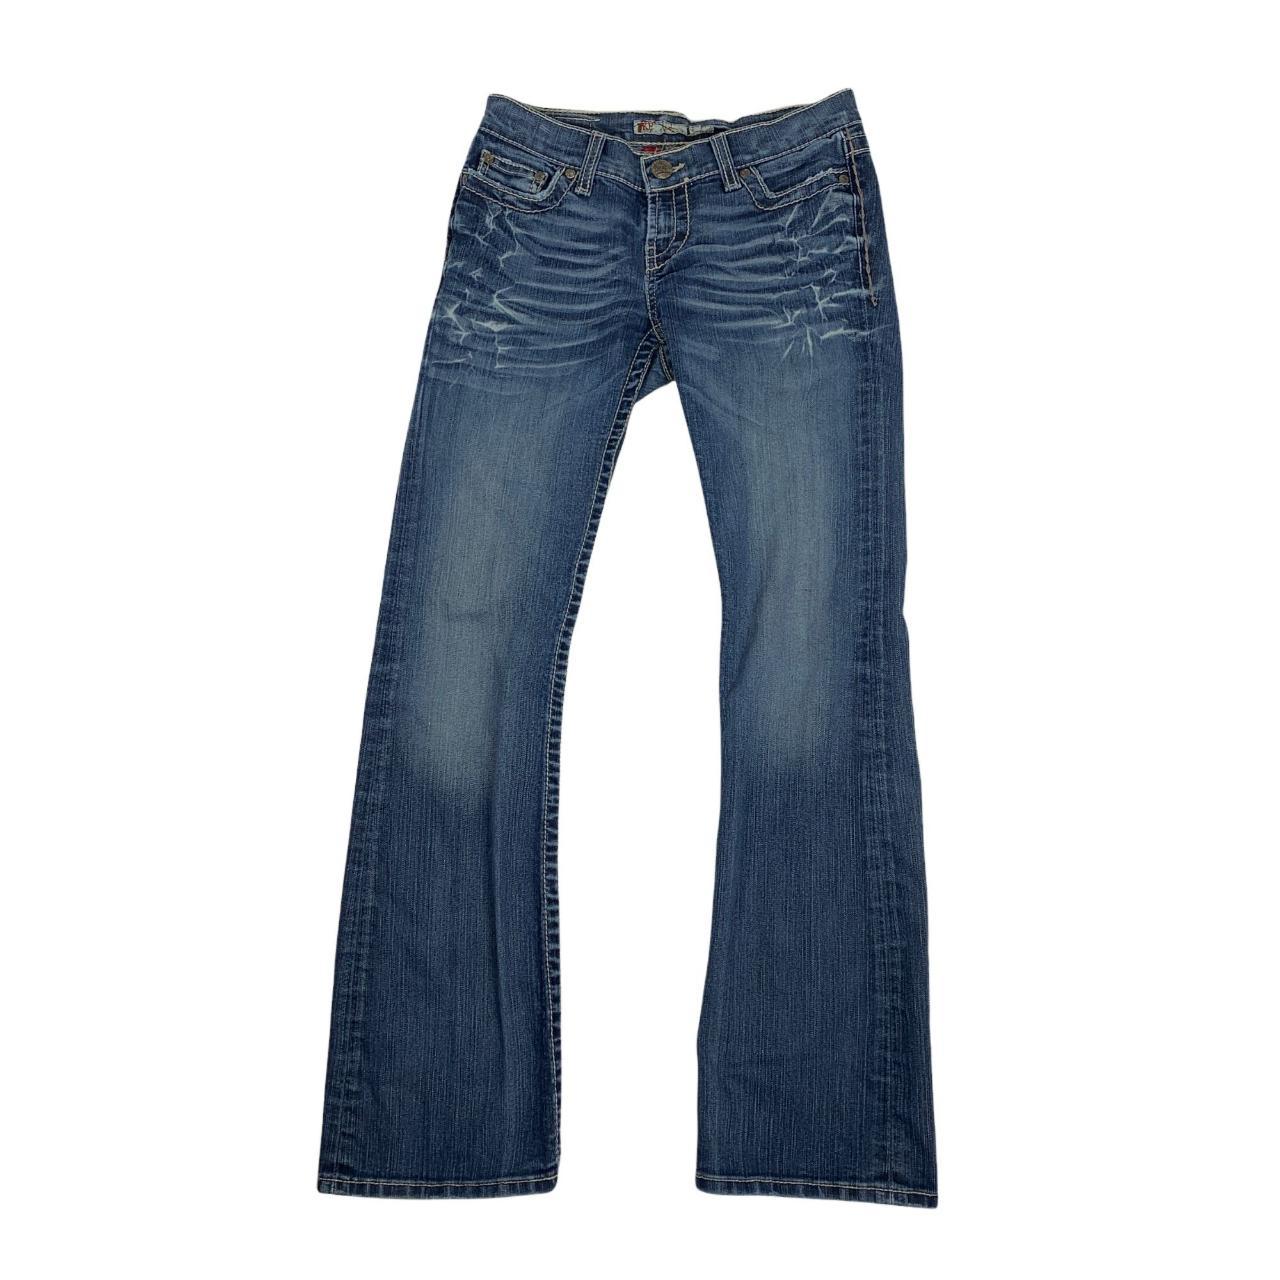 BKE Buckle jeans - bootcut, medium LEXI STYLE... - Depop